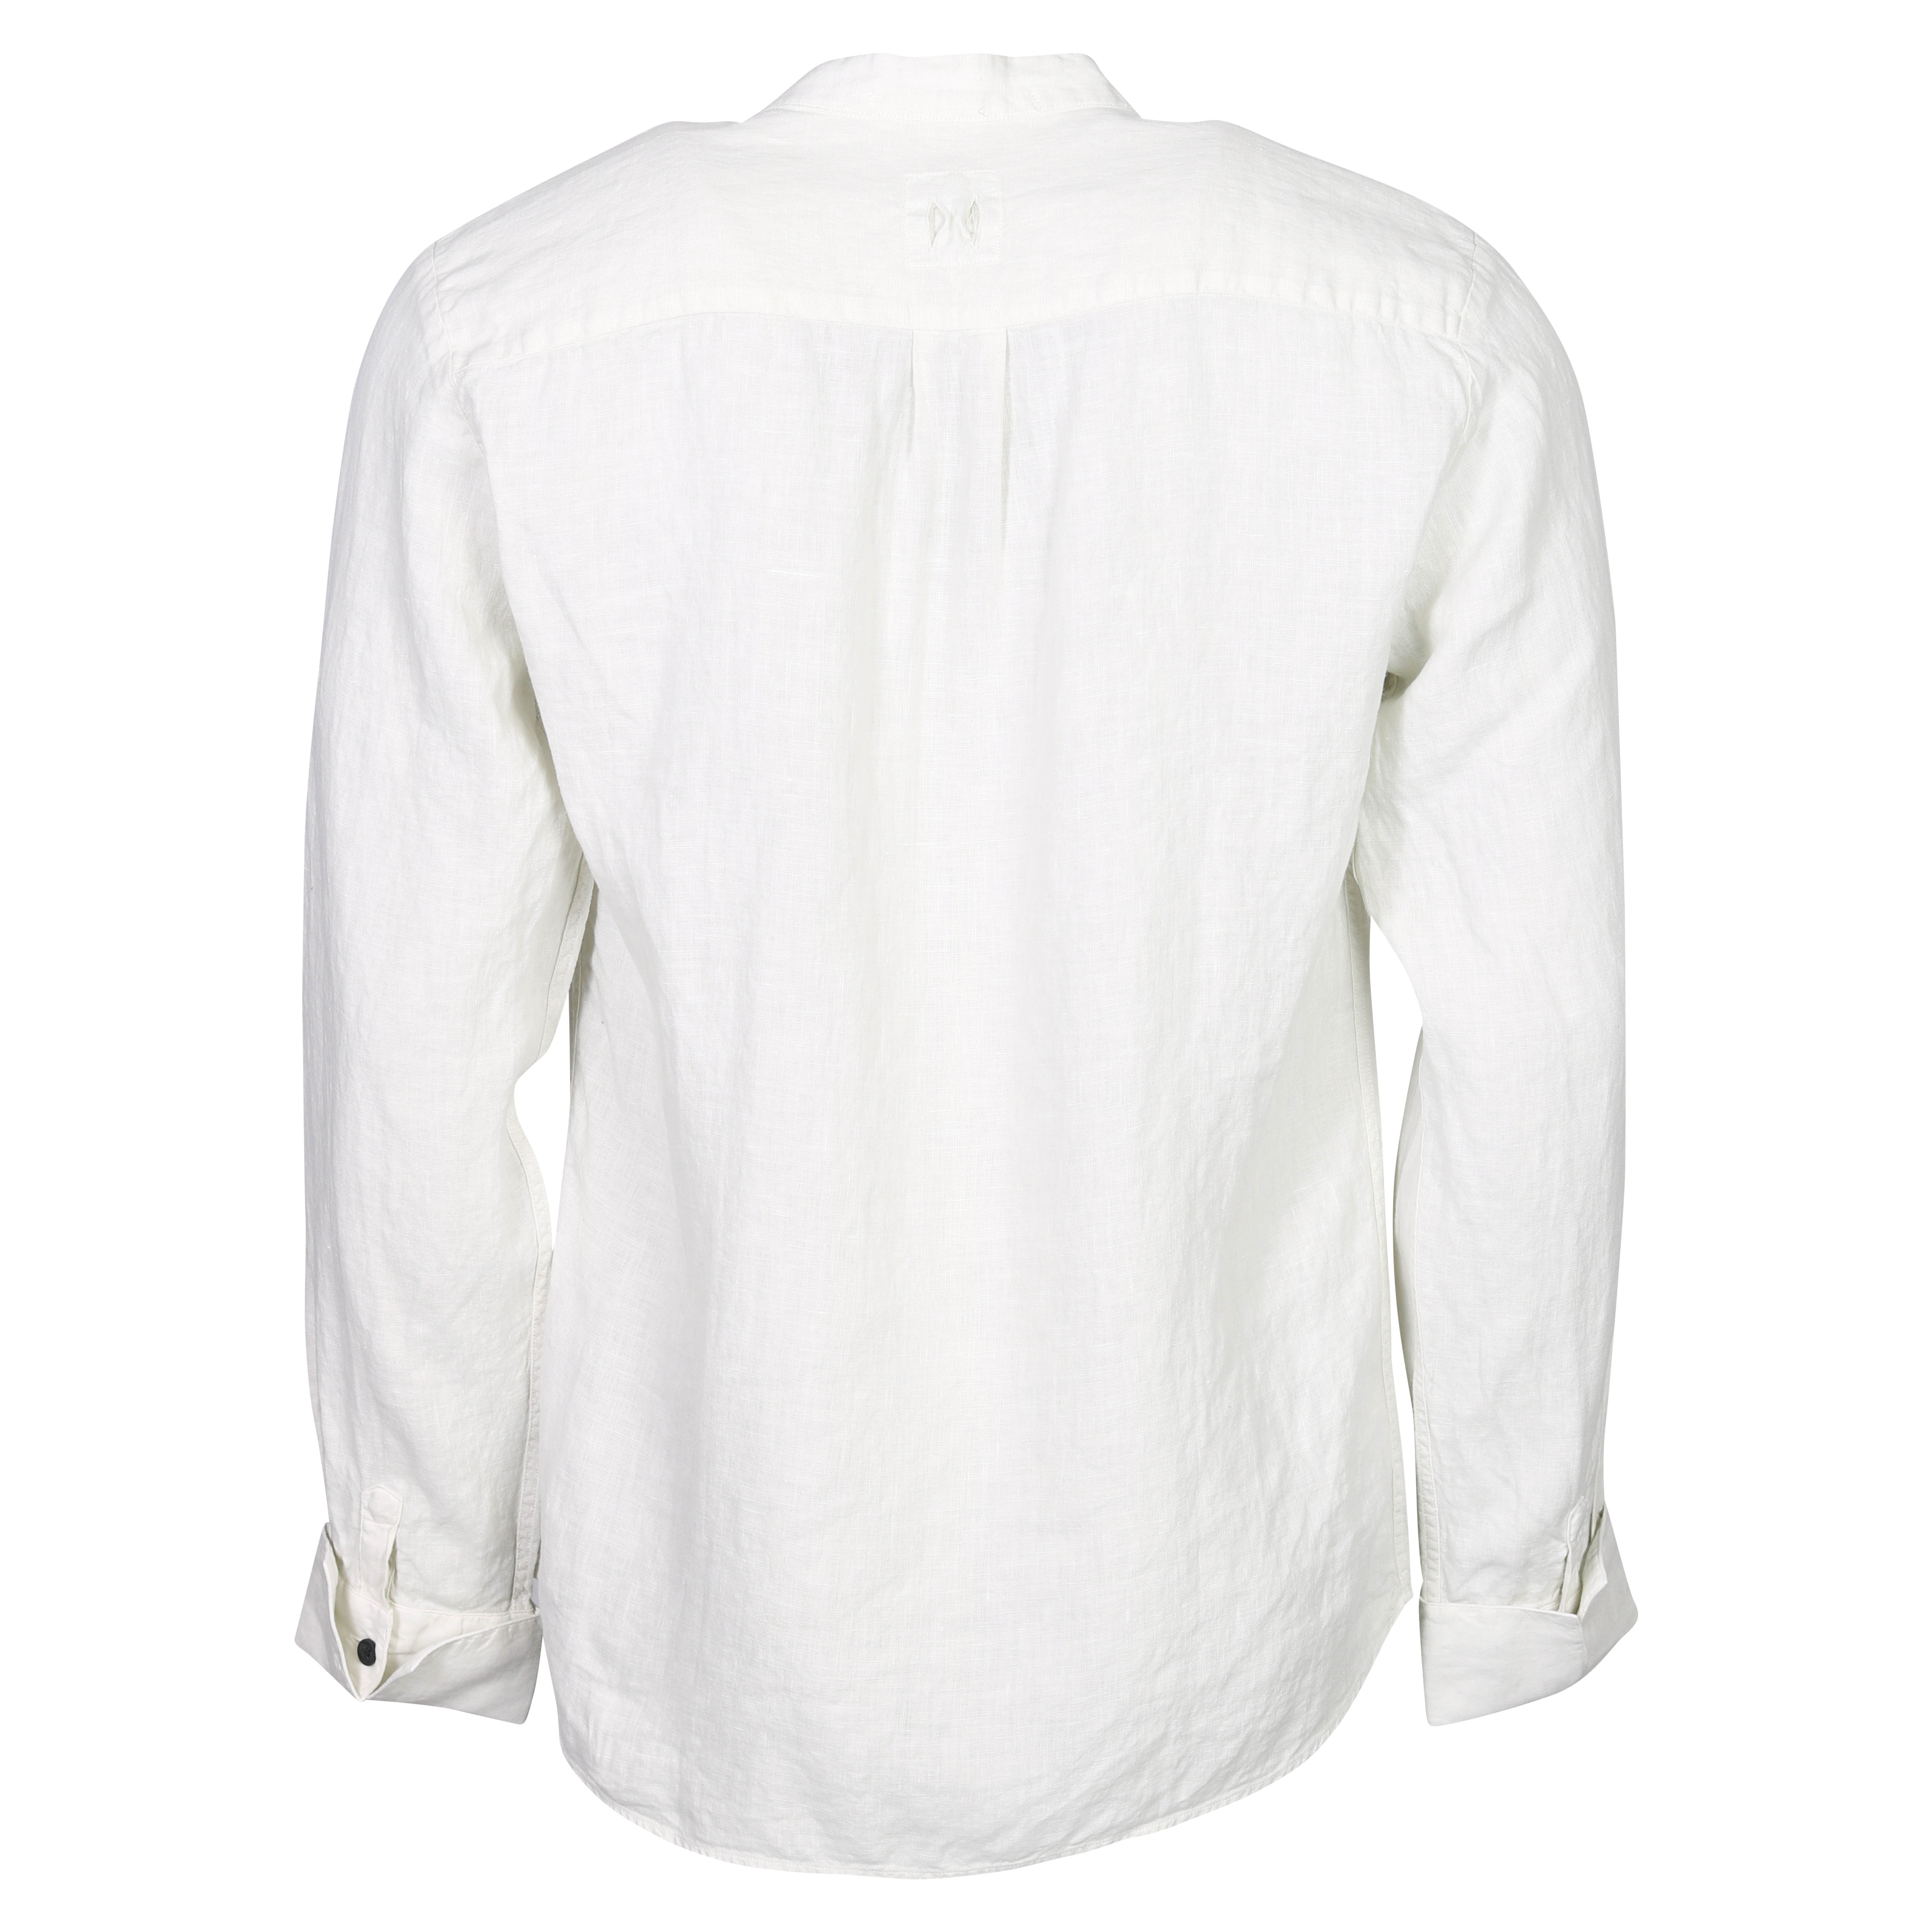 Hannes Roether Linen Buttoned Through Shirt in Ecru